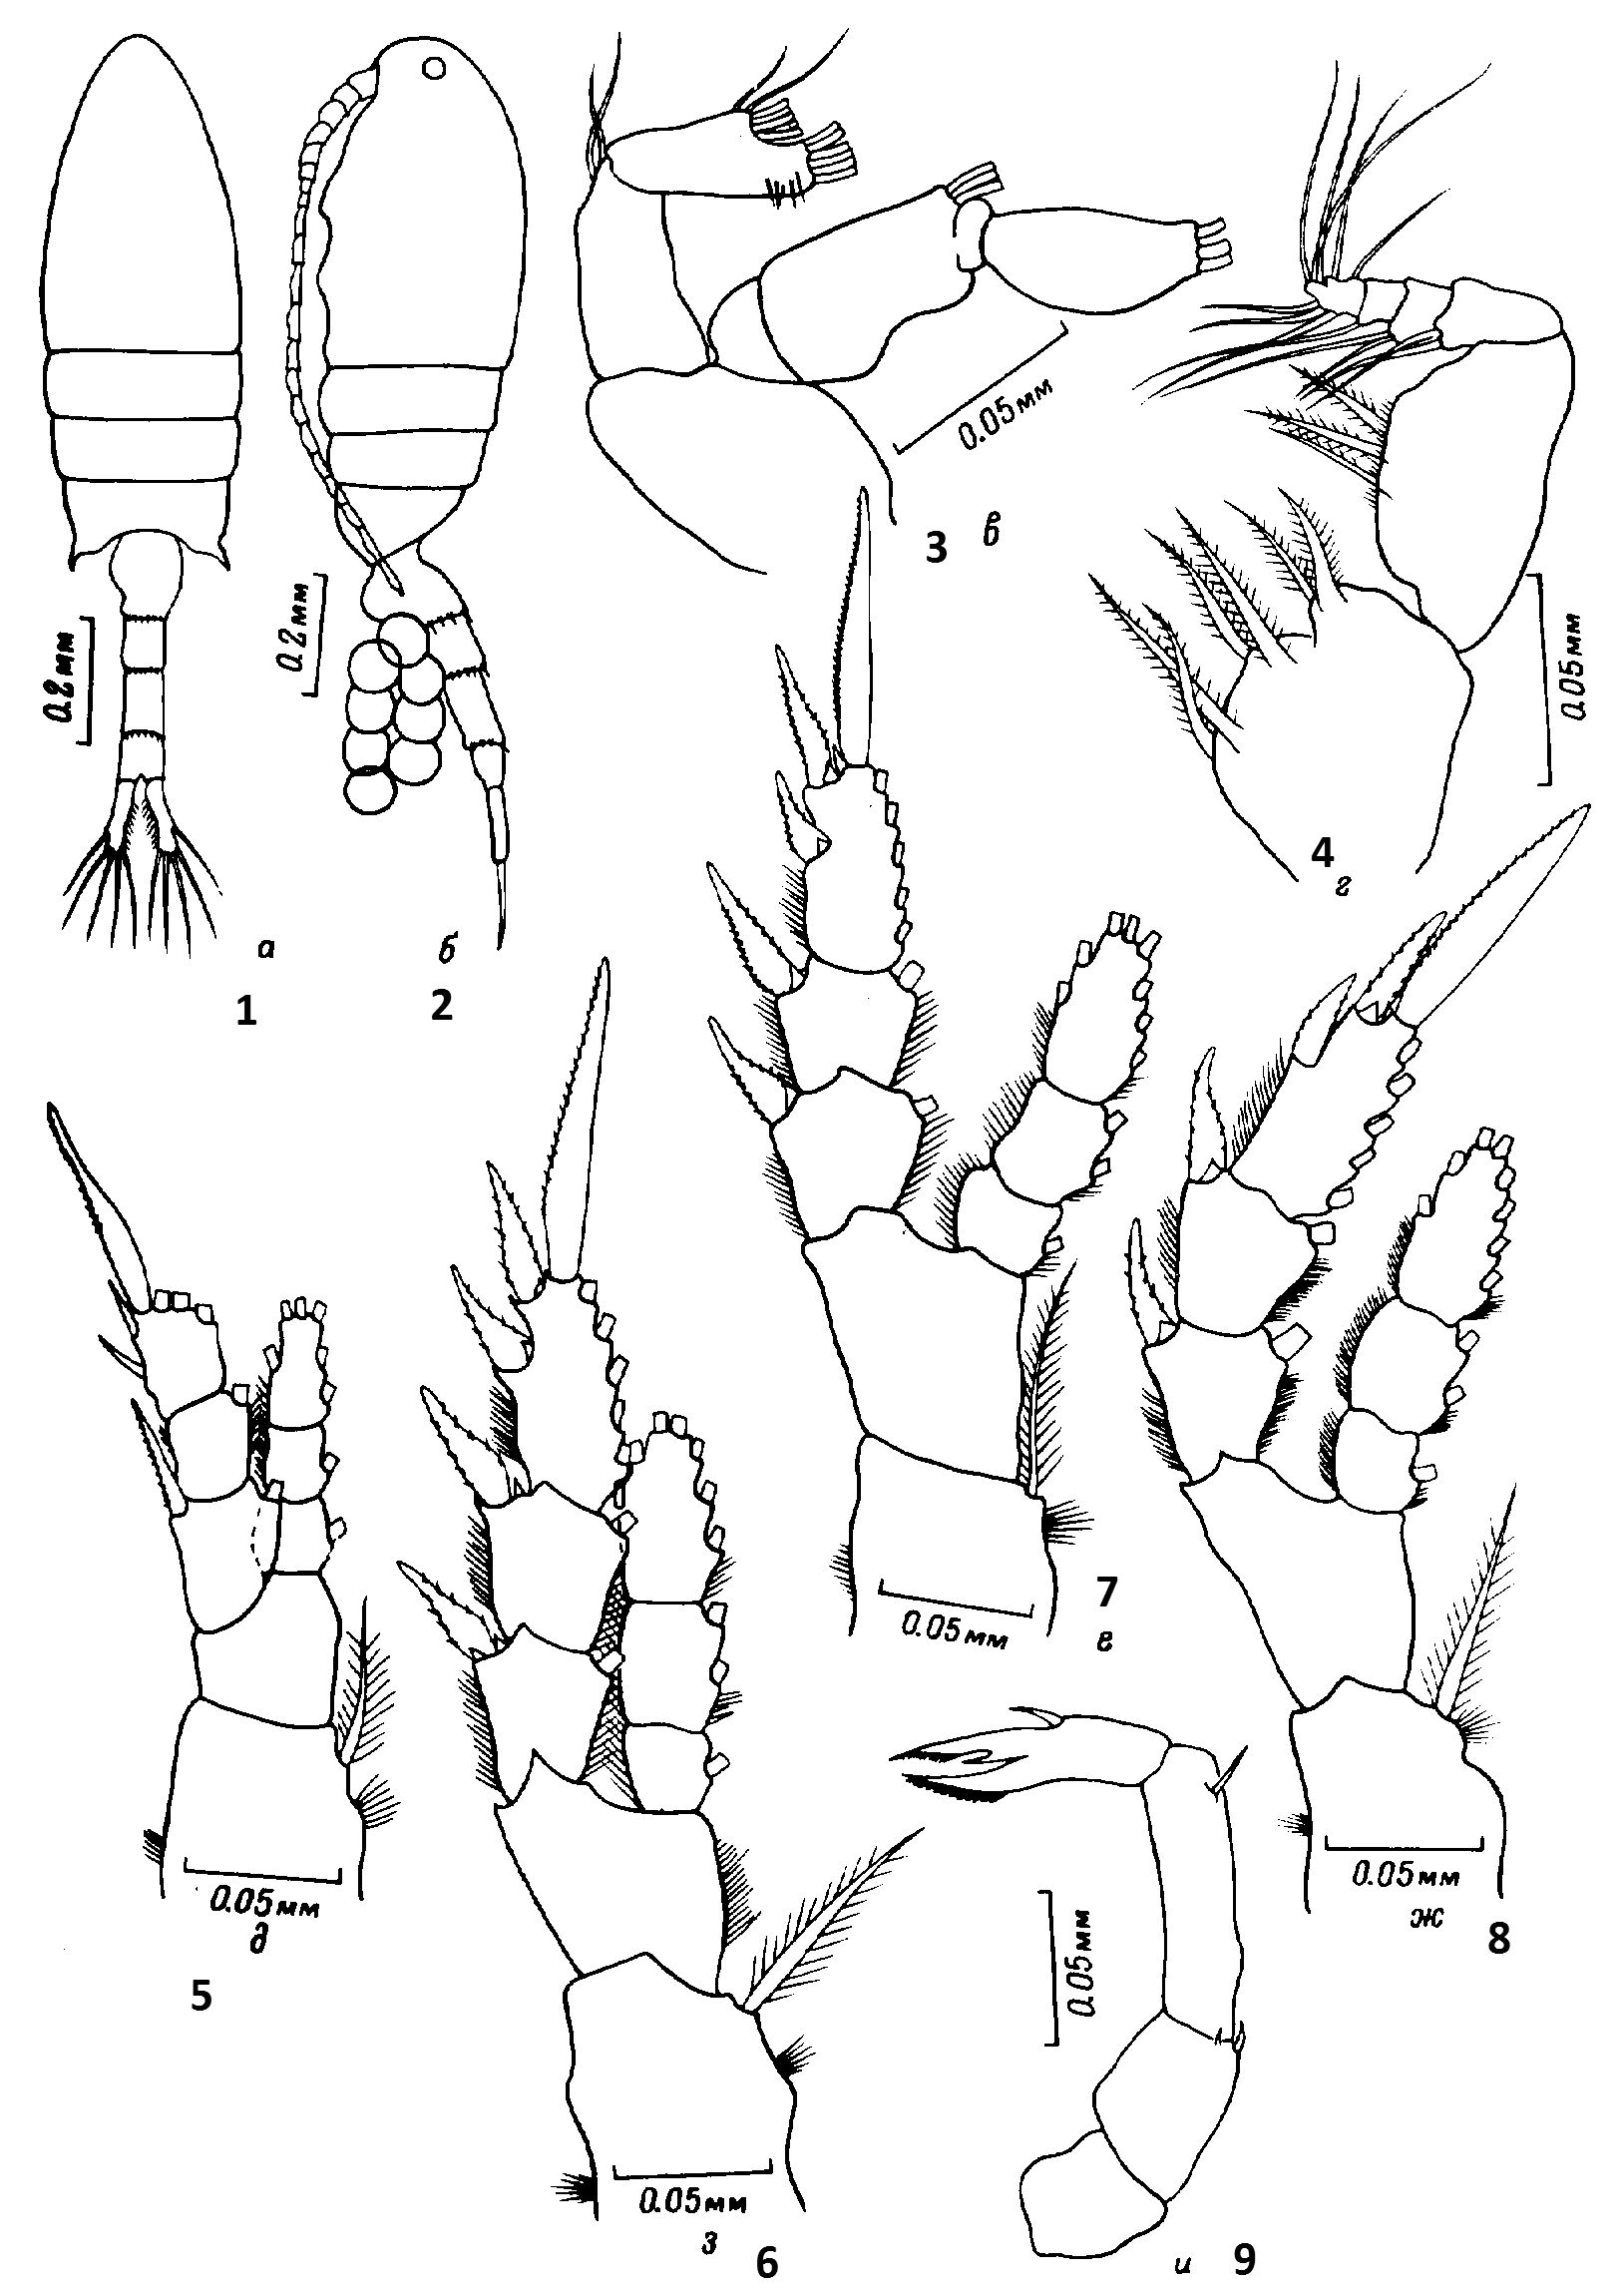 Species Pseudodiaptomus marinus - Plate 12 of morphological figures